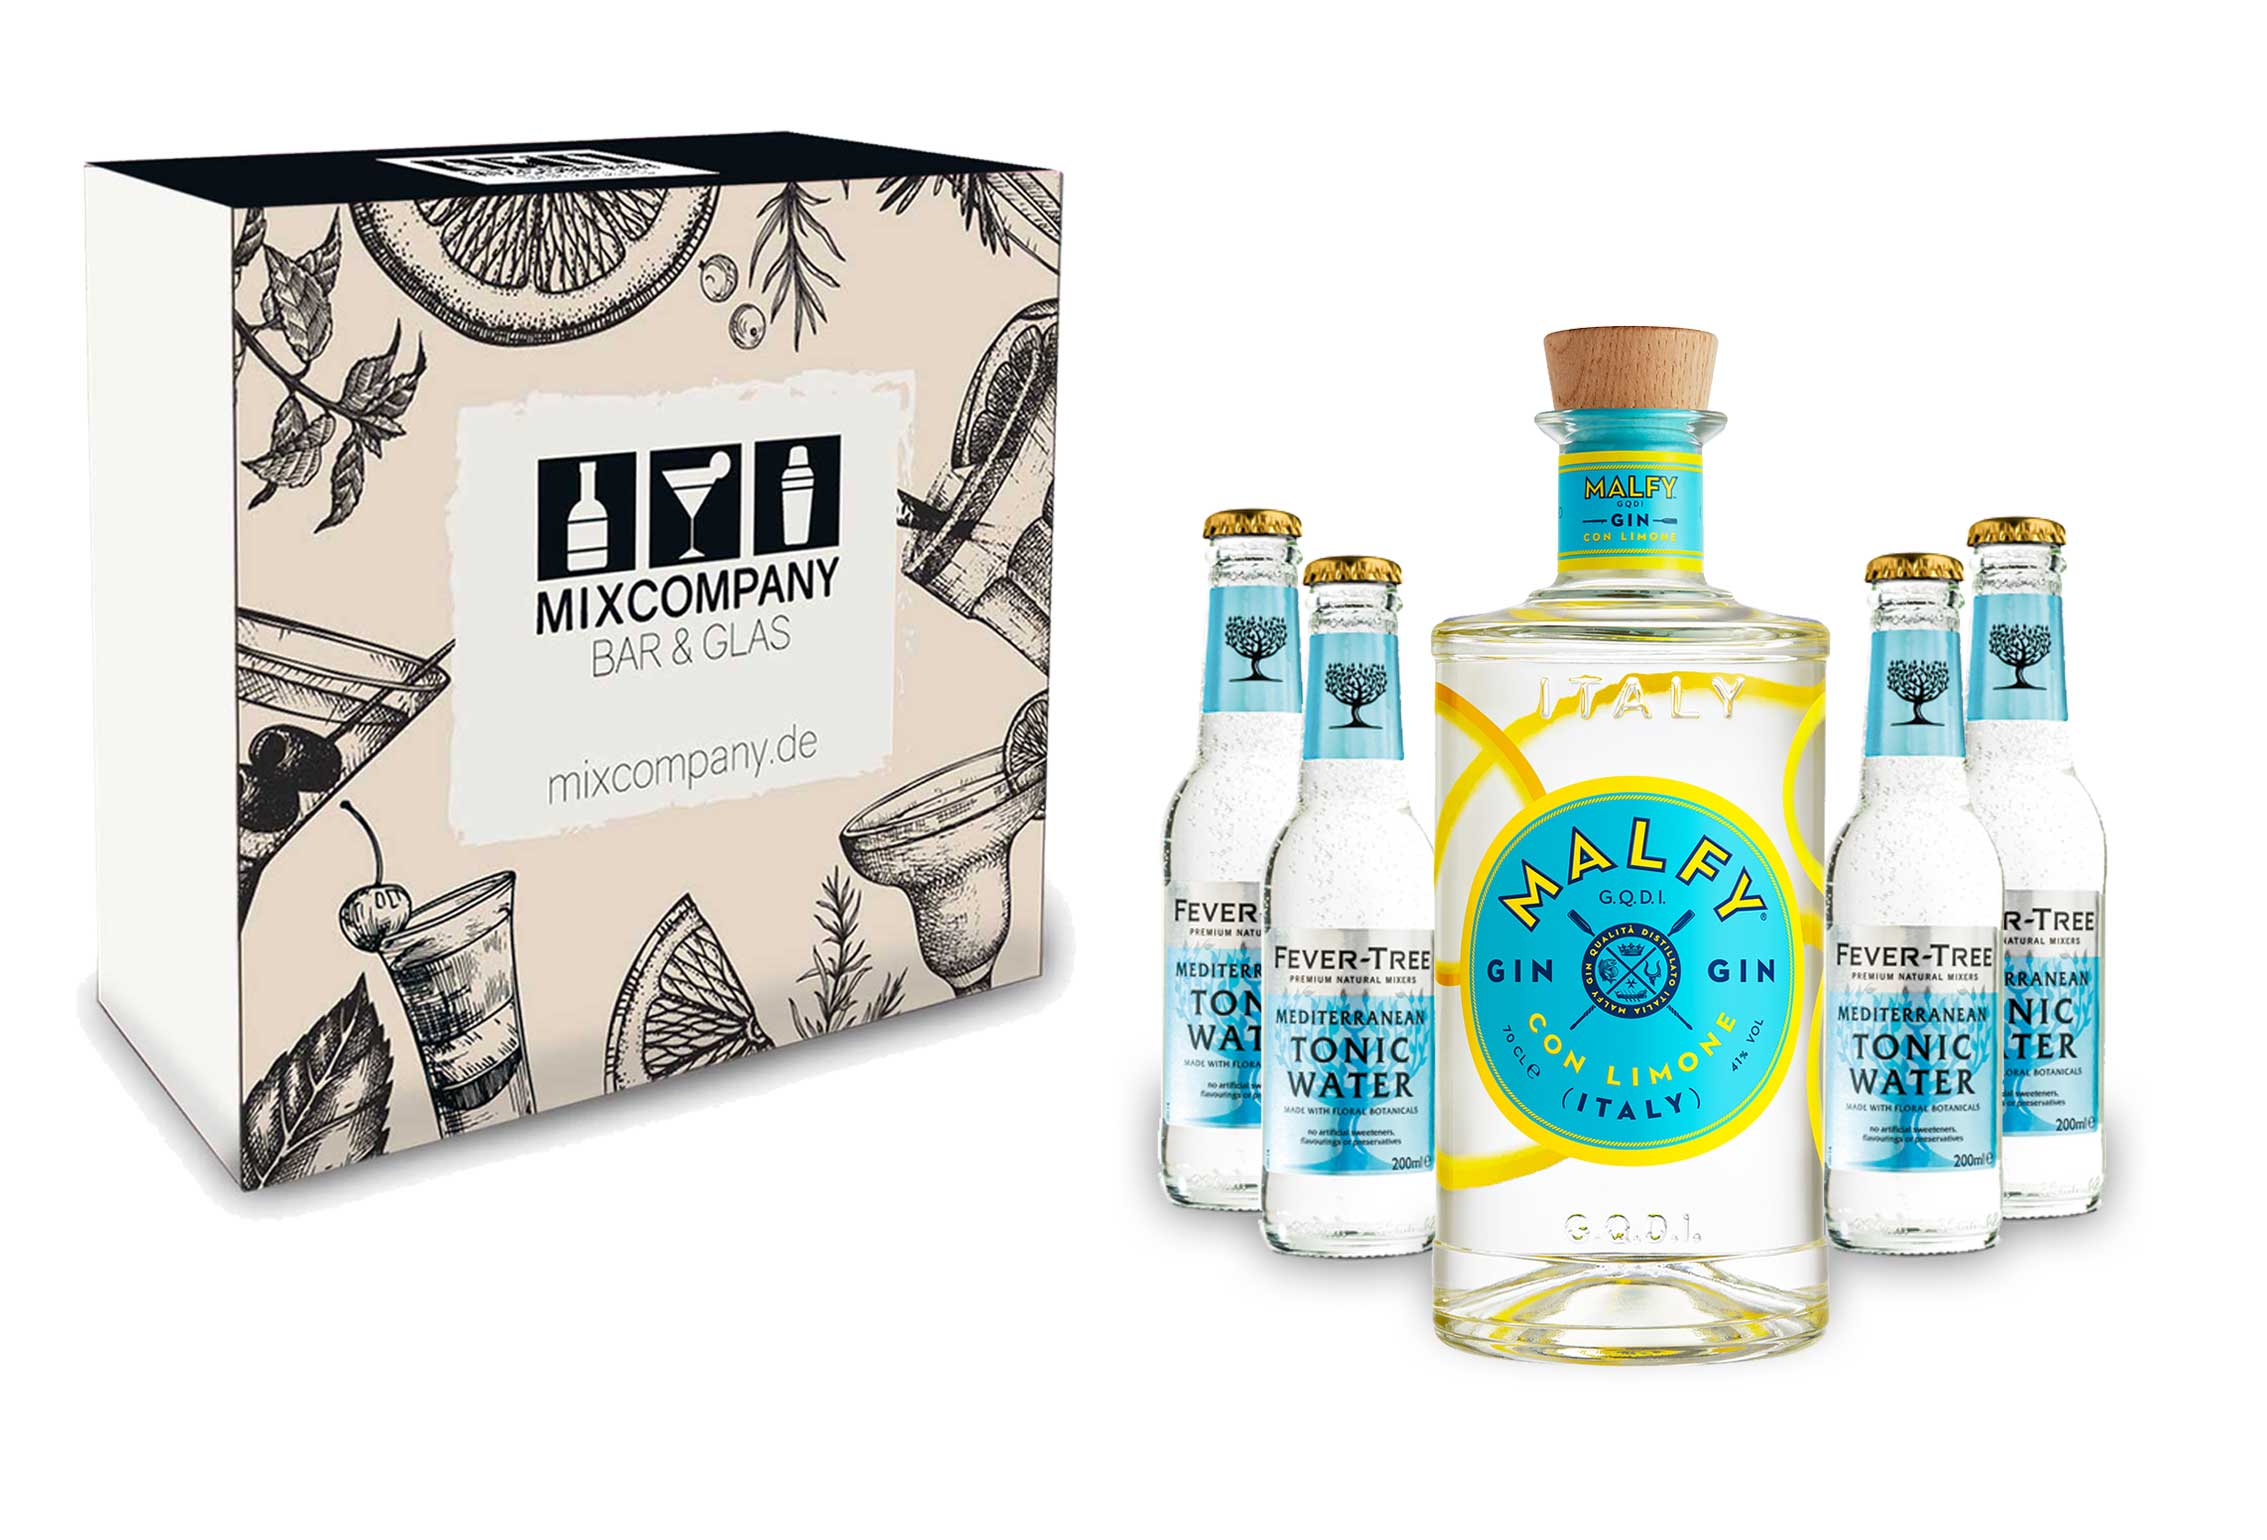 Malfy Gin Tonic Giftbox Set - Malfy Gin con Limone (Zitrone) 0,7l - 700ml (41% VOL) + 4x Fever-Tree Mediterranean Tonic Water 200ml inkl. Pfand MEHRWEG- [Enthält Sulfite]